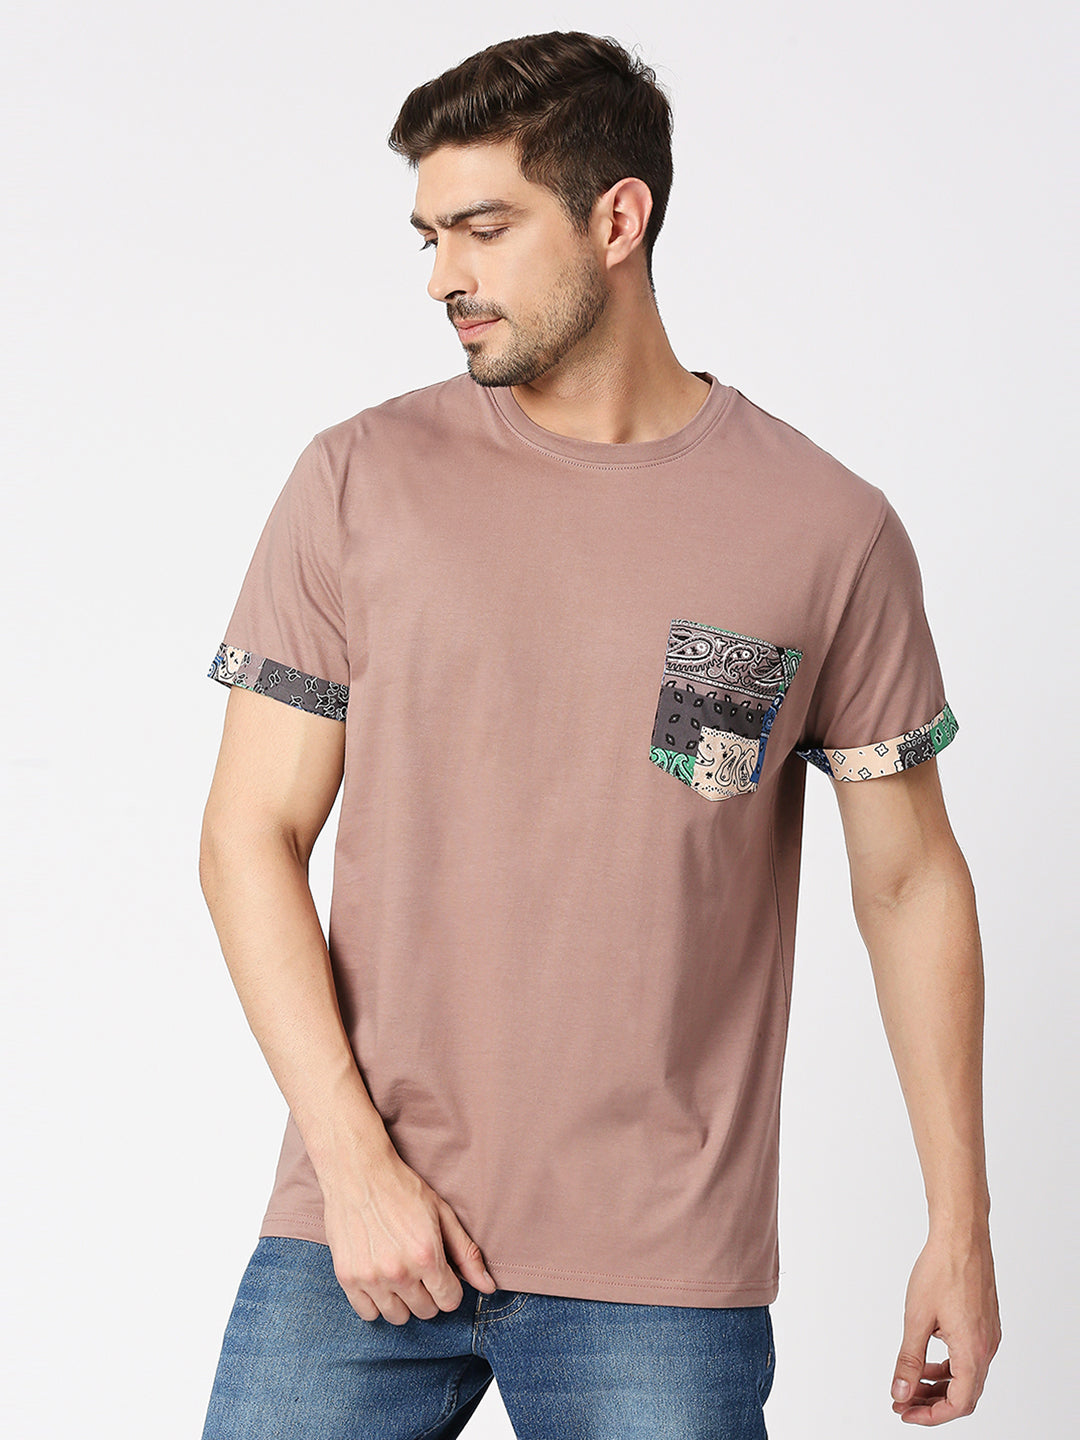 Buy BLAMBLACK Men's Textured Half Sleeves Regular Fit Round neck T-Shirt with Contrast Pocket